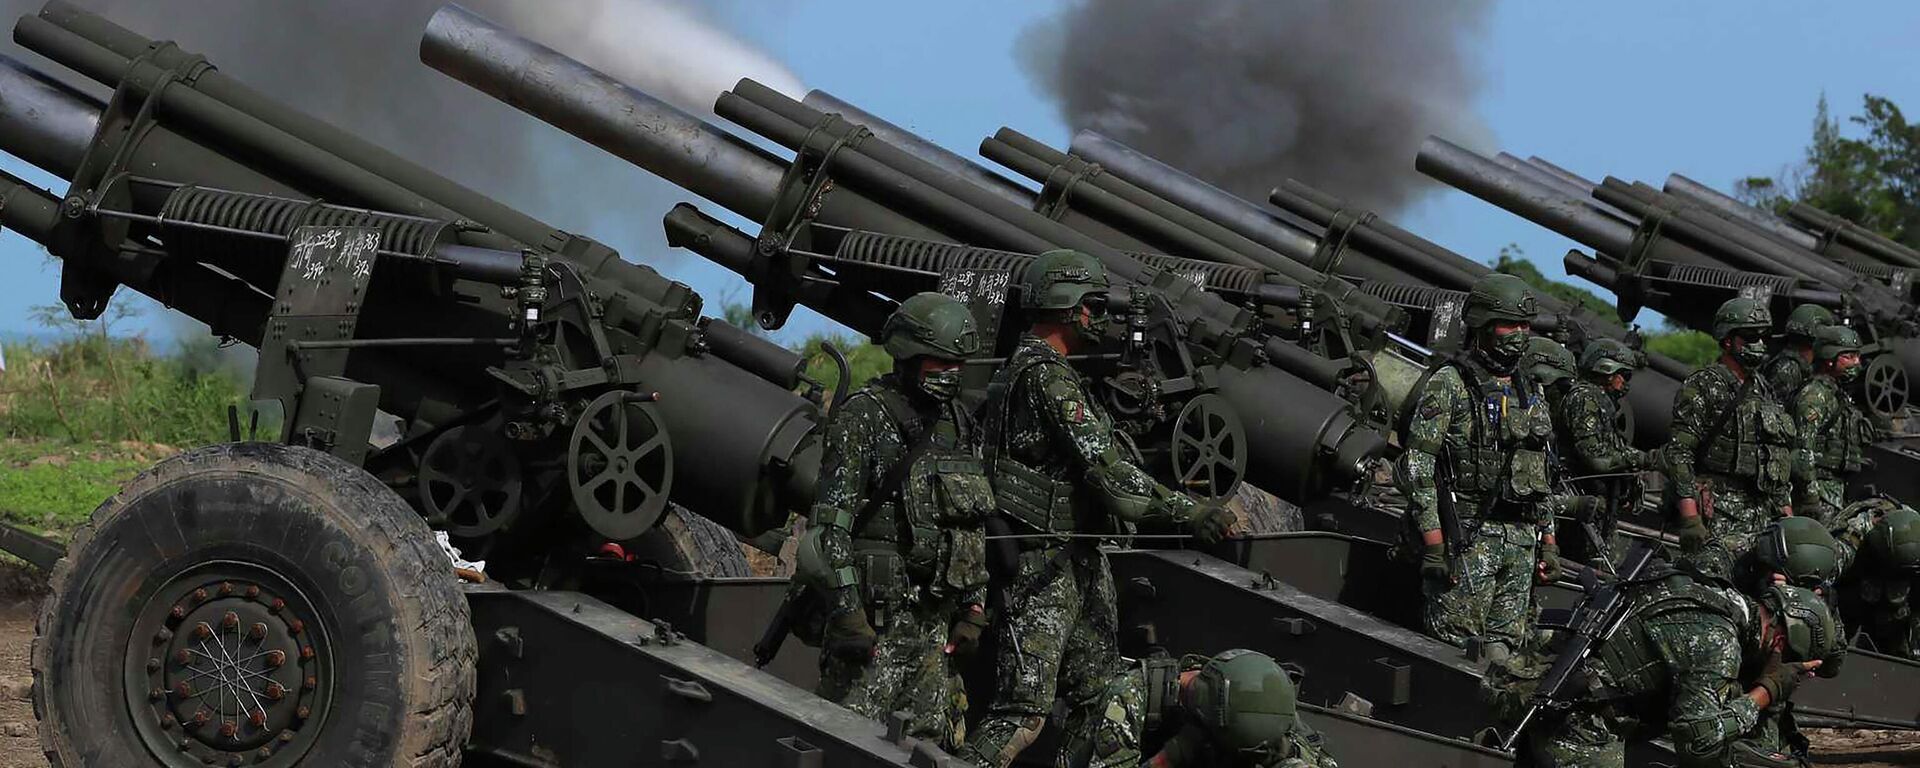 Armas de artilharia taiwanesas disparando durante exercícios antiaterrissagem Han Guang realizados ao longo da costa de Pingtung, Taiwan, 16 de setembro de 2021 - Sputnik Brasil, 1920, 02.09.2022